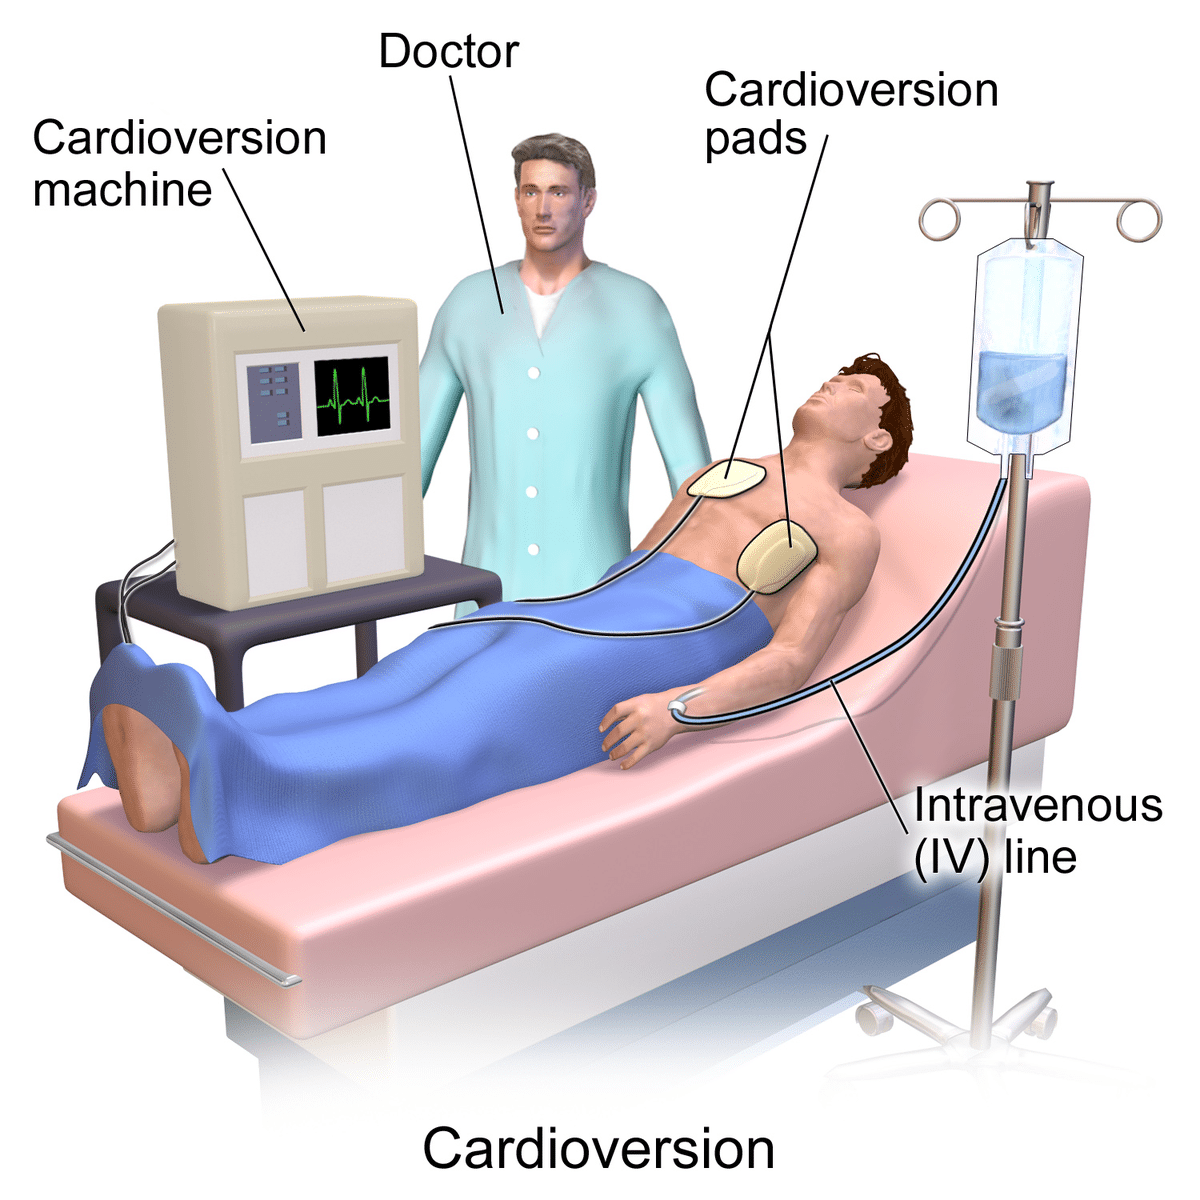 Cardioversion, Iran